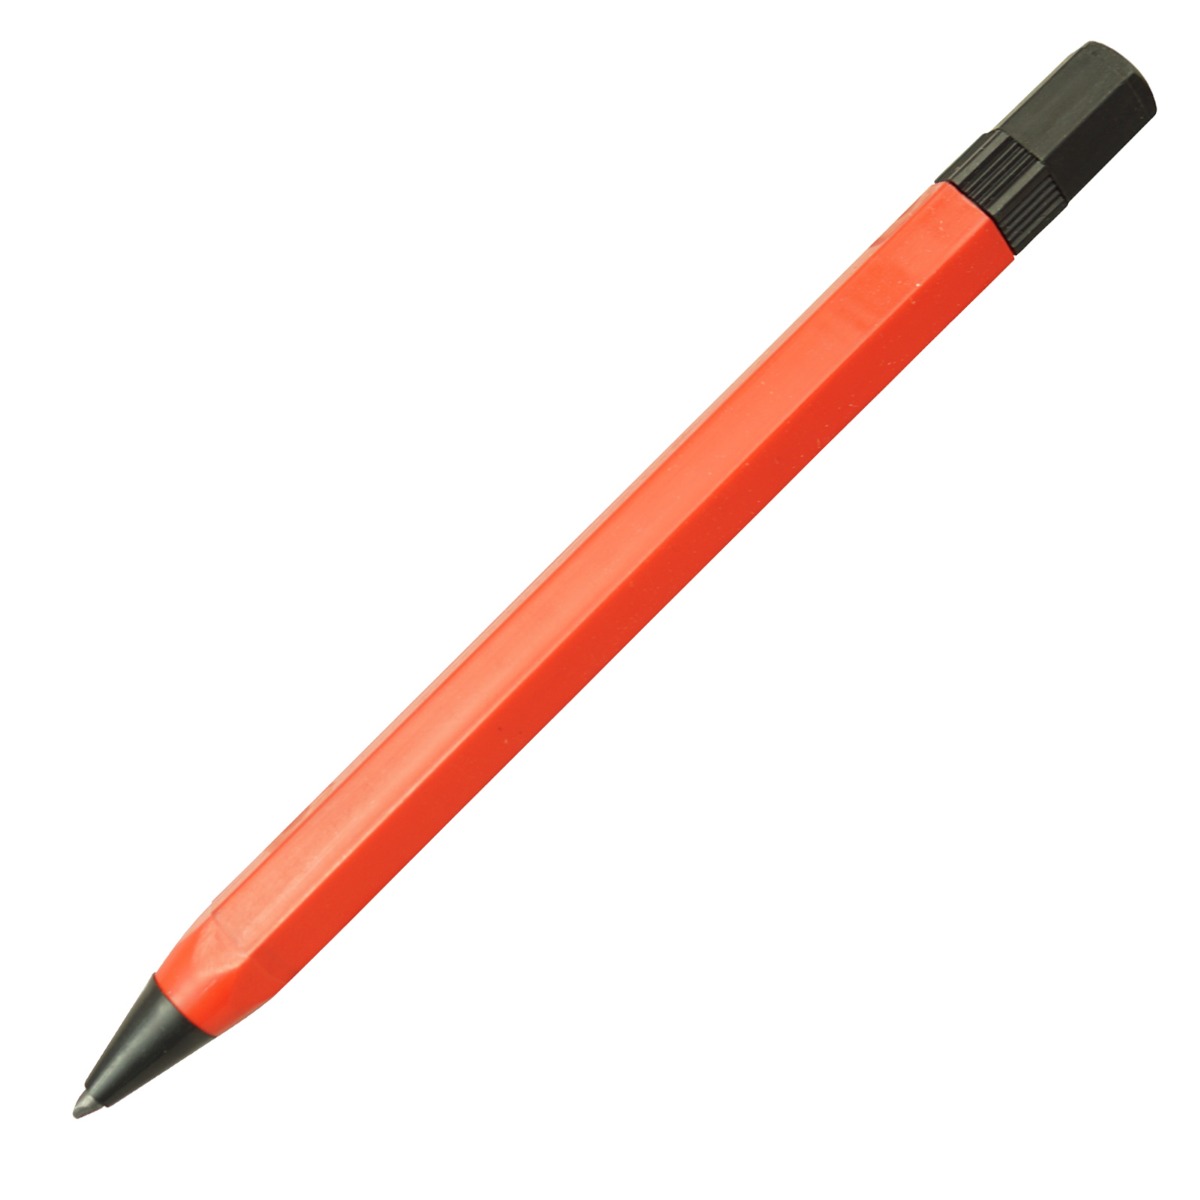  Penhouse Model No :17073 2.0 mm   Red Color Body Twist Type Tip Pencil